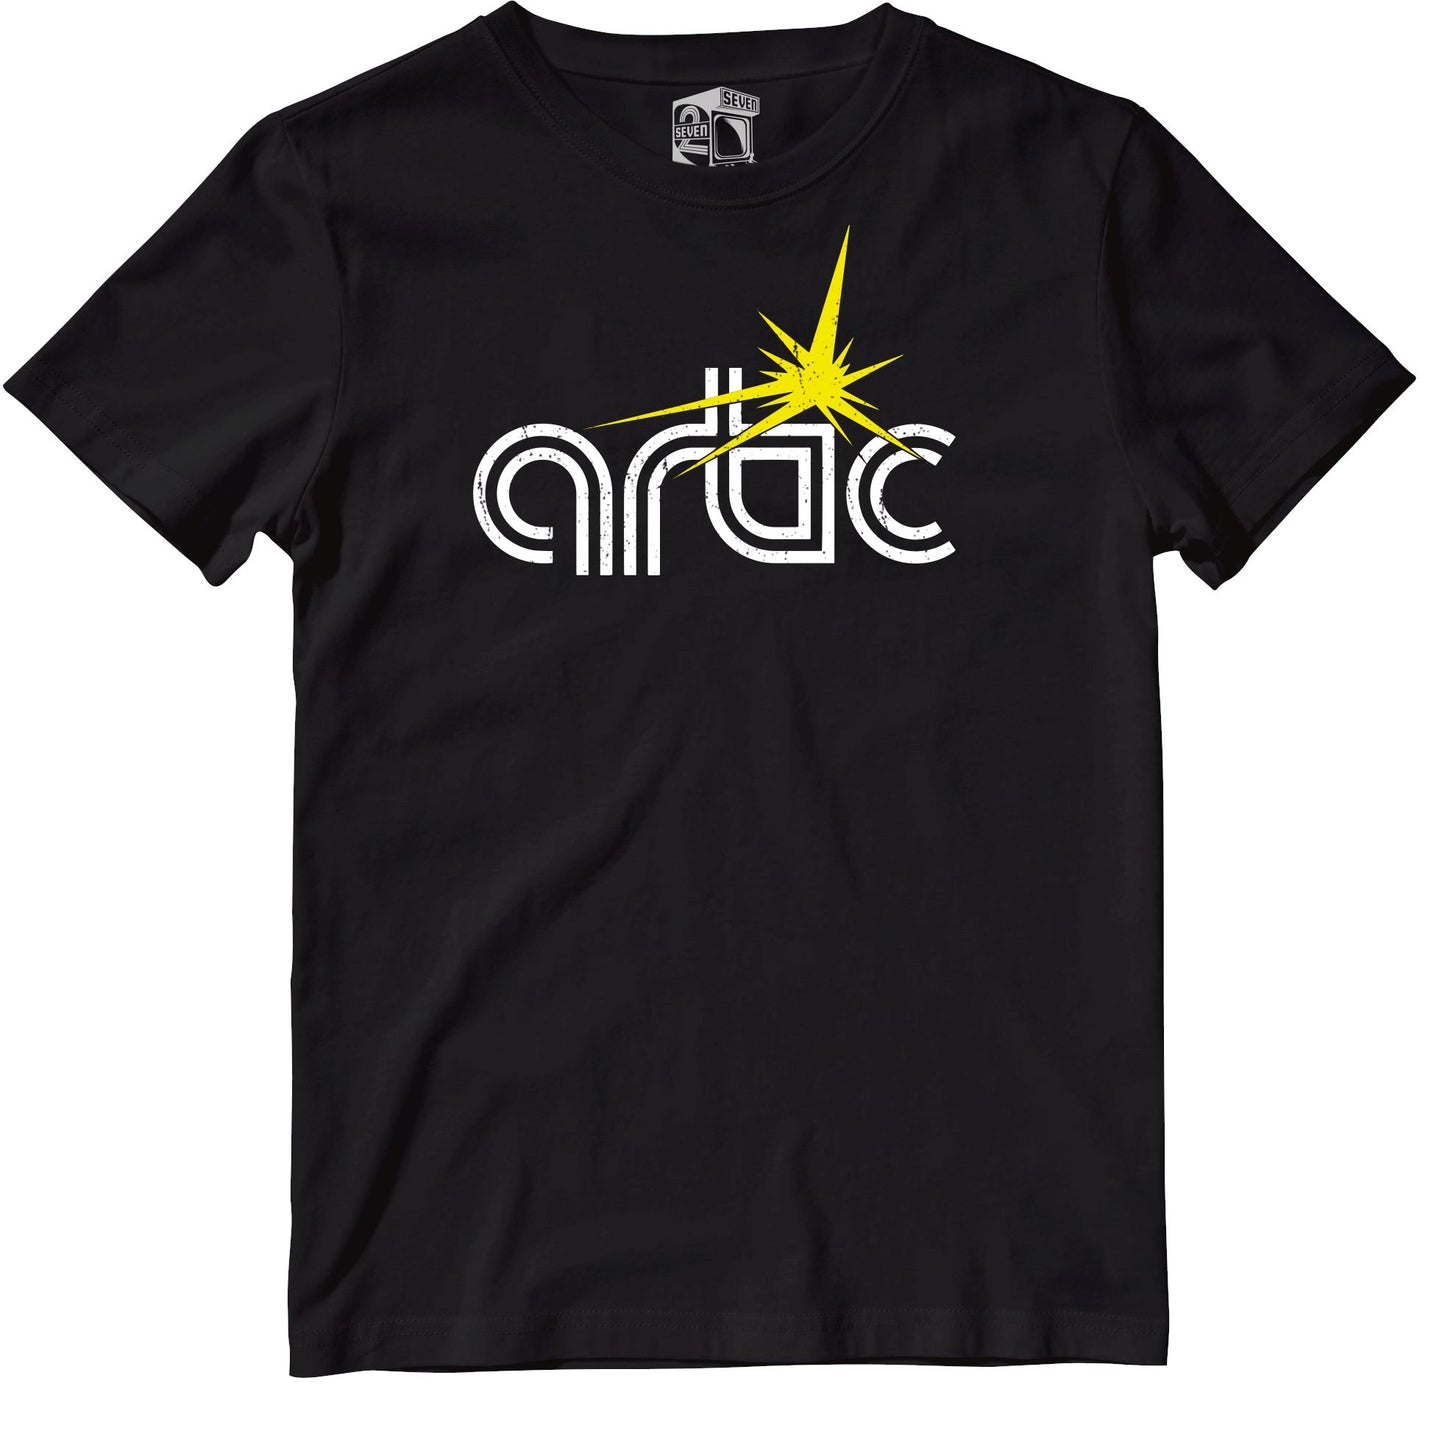 Artic Computing LOGO Retro Gaming T-Shirt T-Shirt Seven Squared Small 34-36" Black 